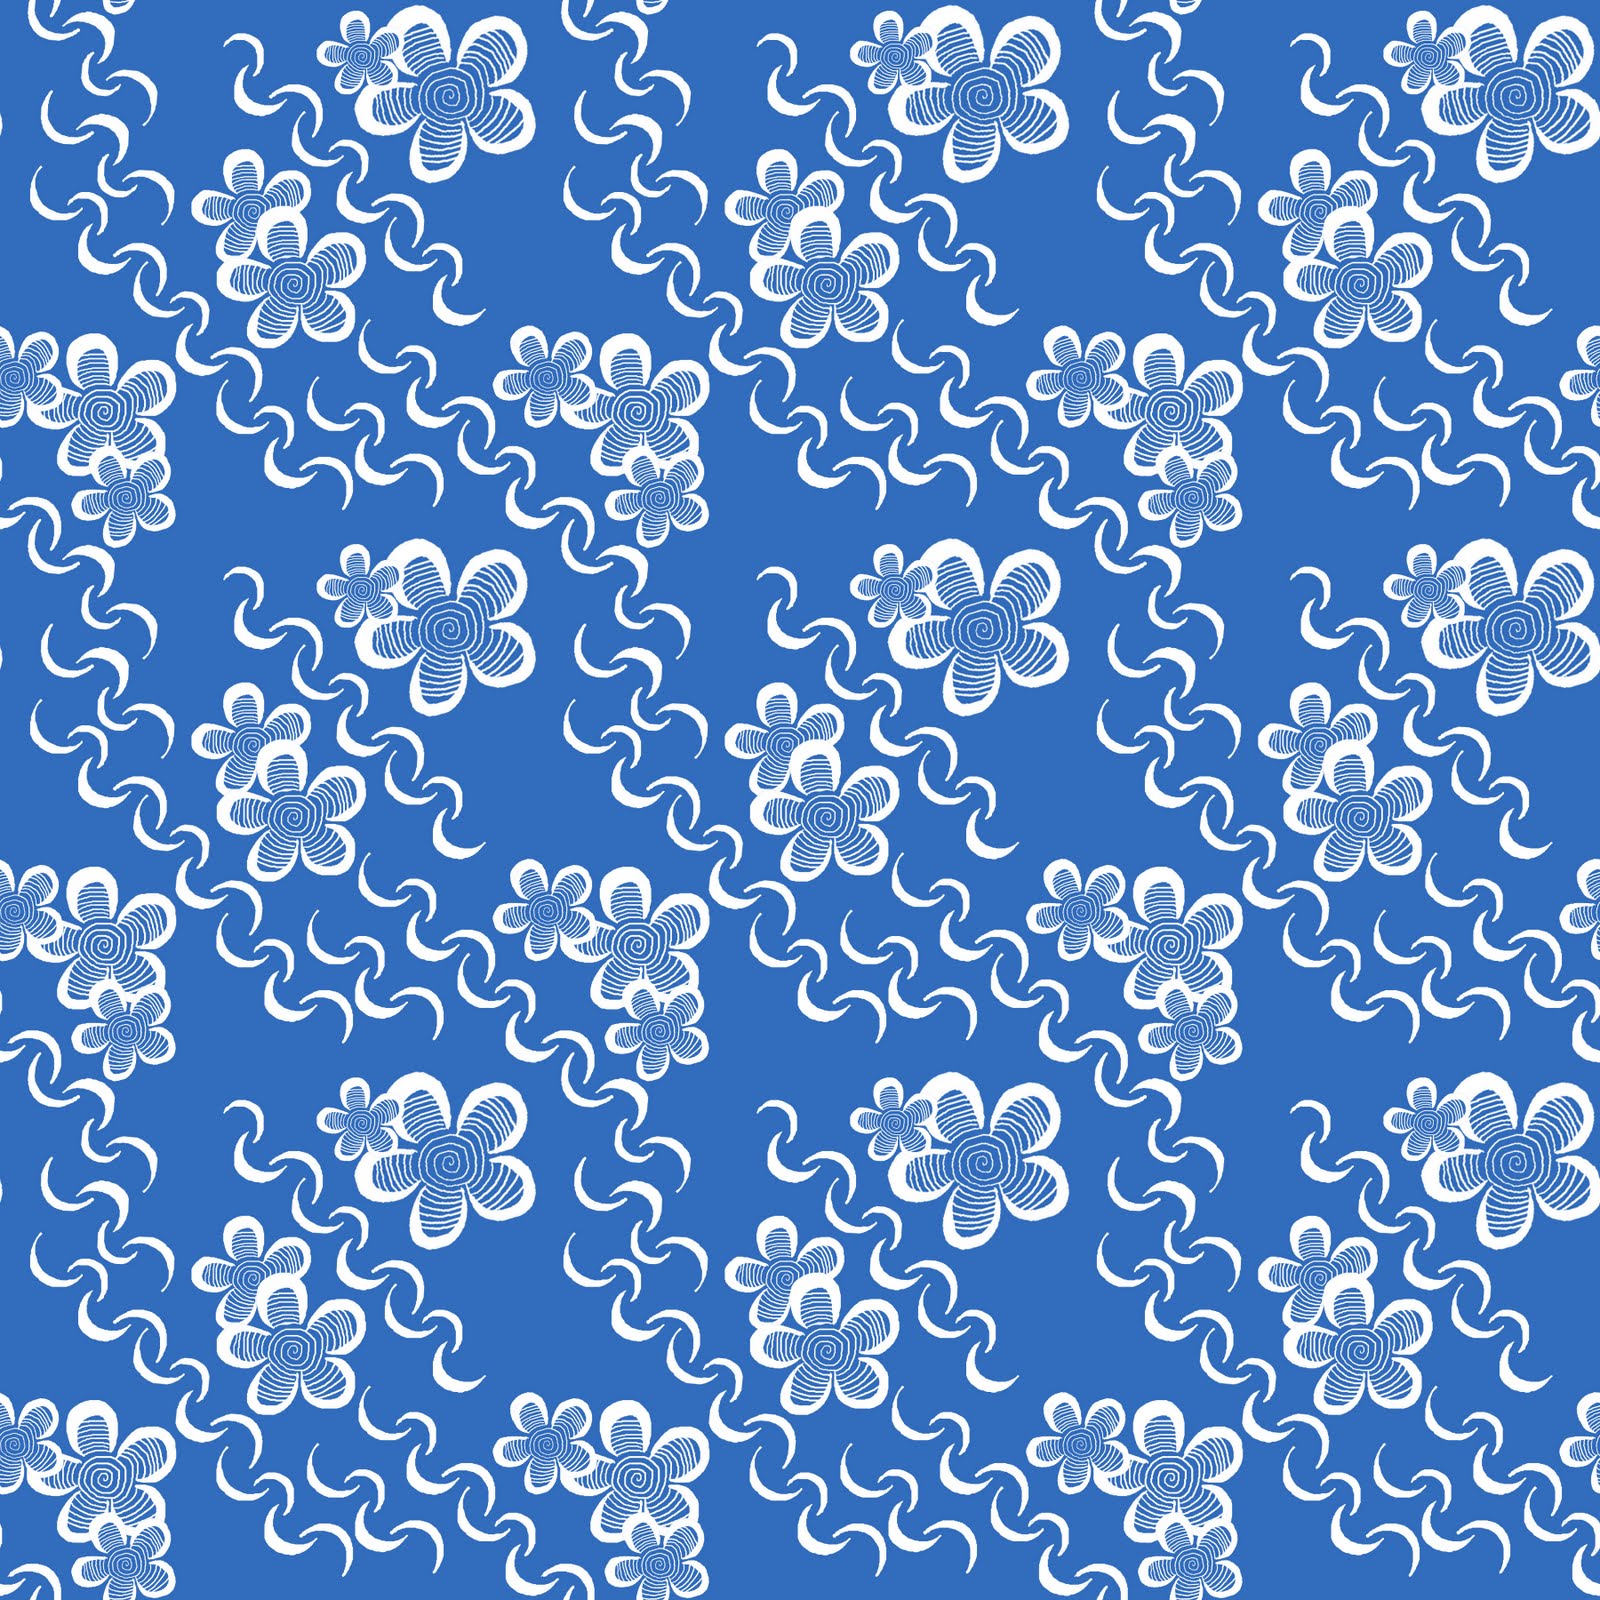 http://3.bp.blogspot.com/-c_v3gpOLYRk/Th44OwXHcUI/AAAAAAAAAb8/g1R5yvslN-Q/s1600/flowery_pattern_blue.jpg